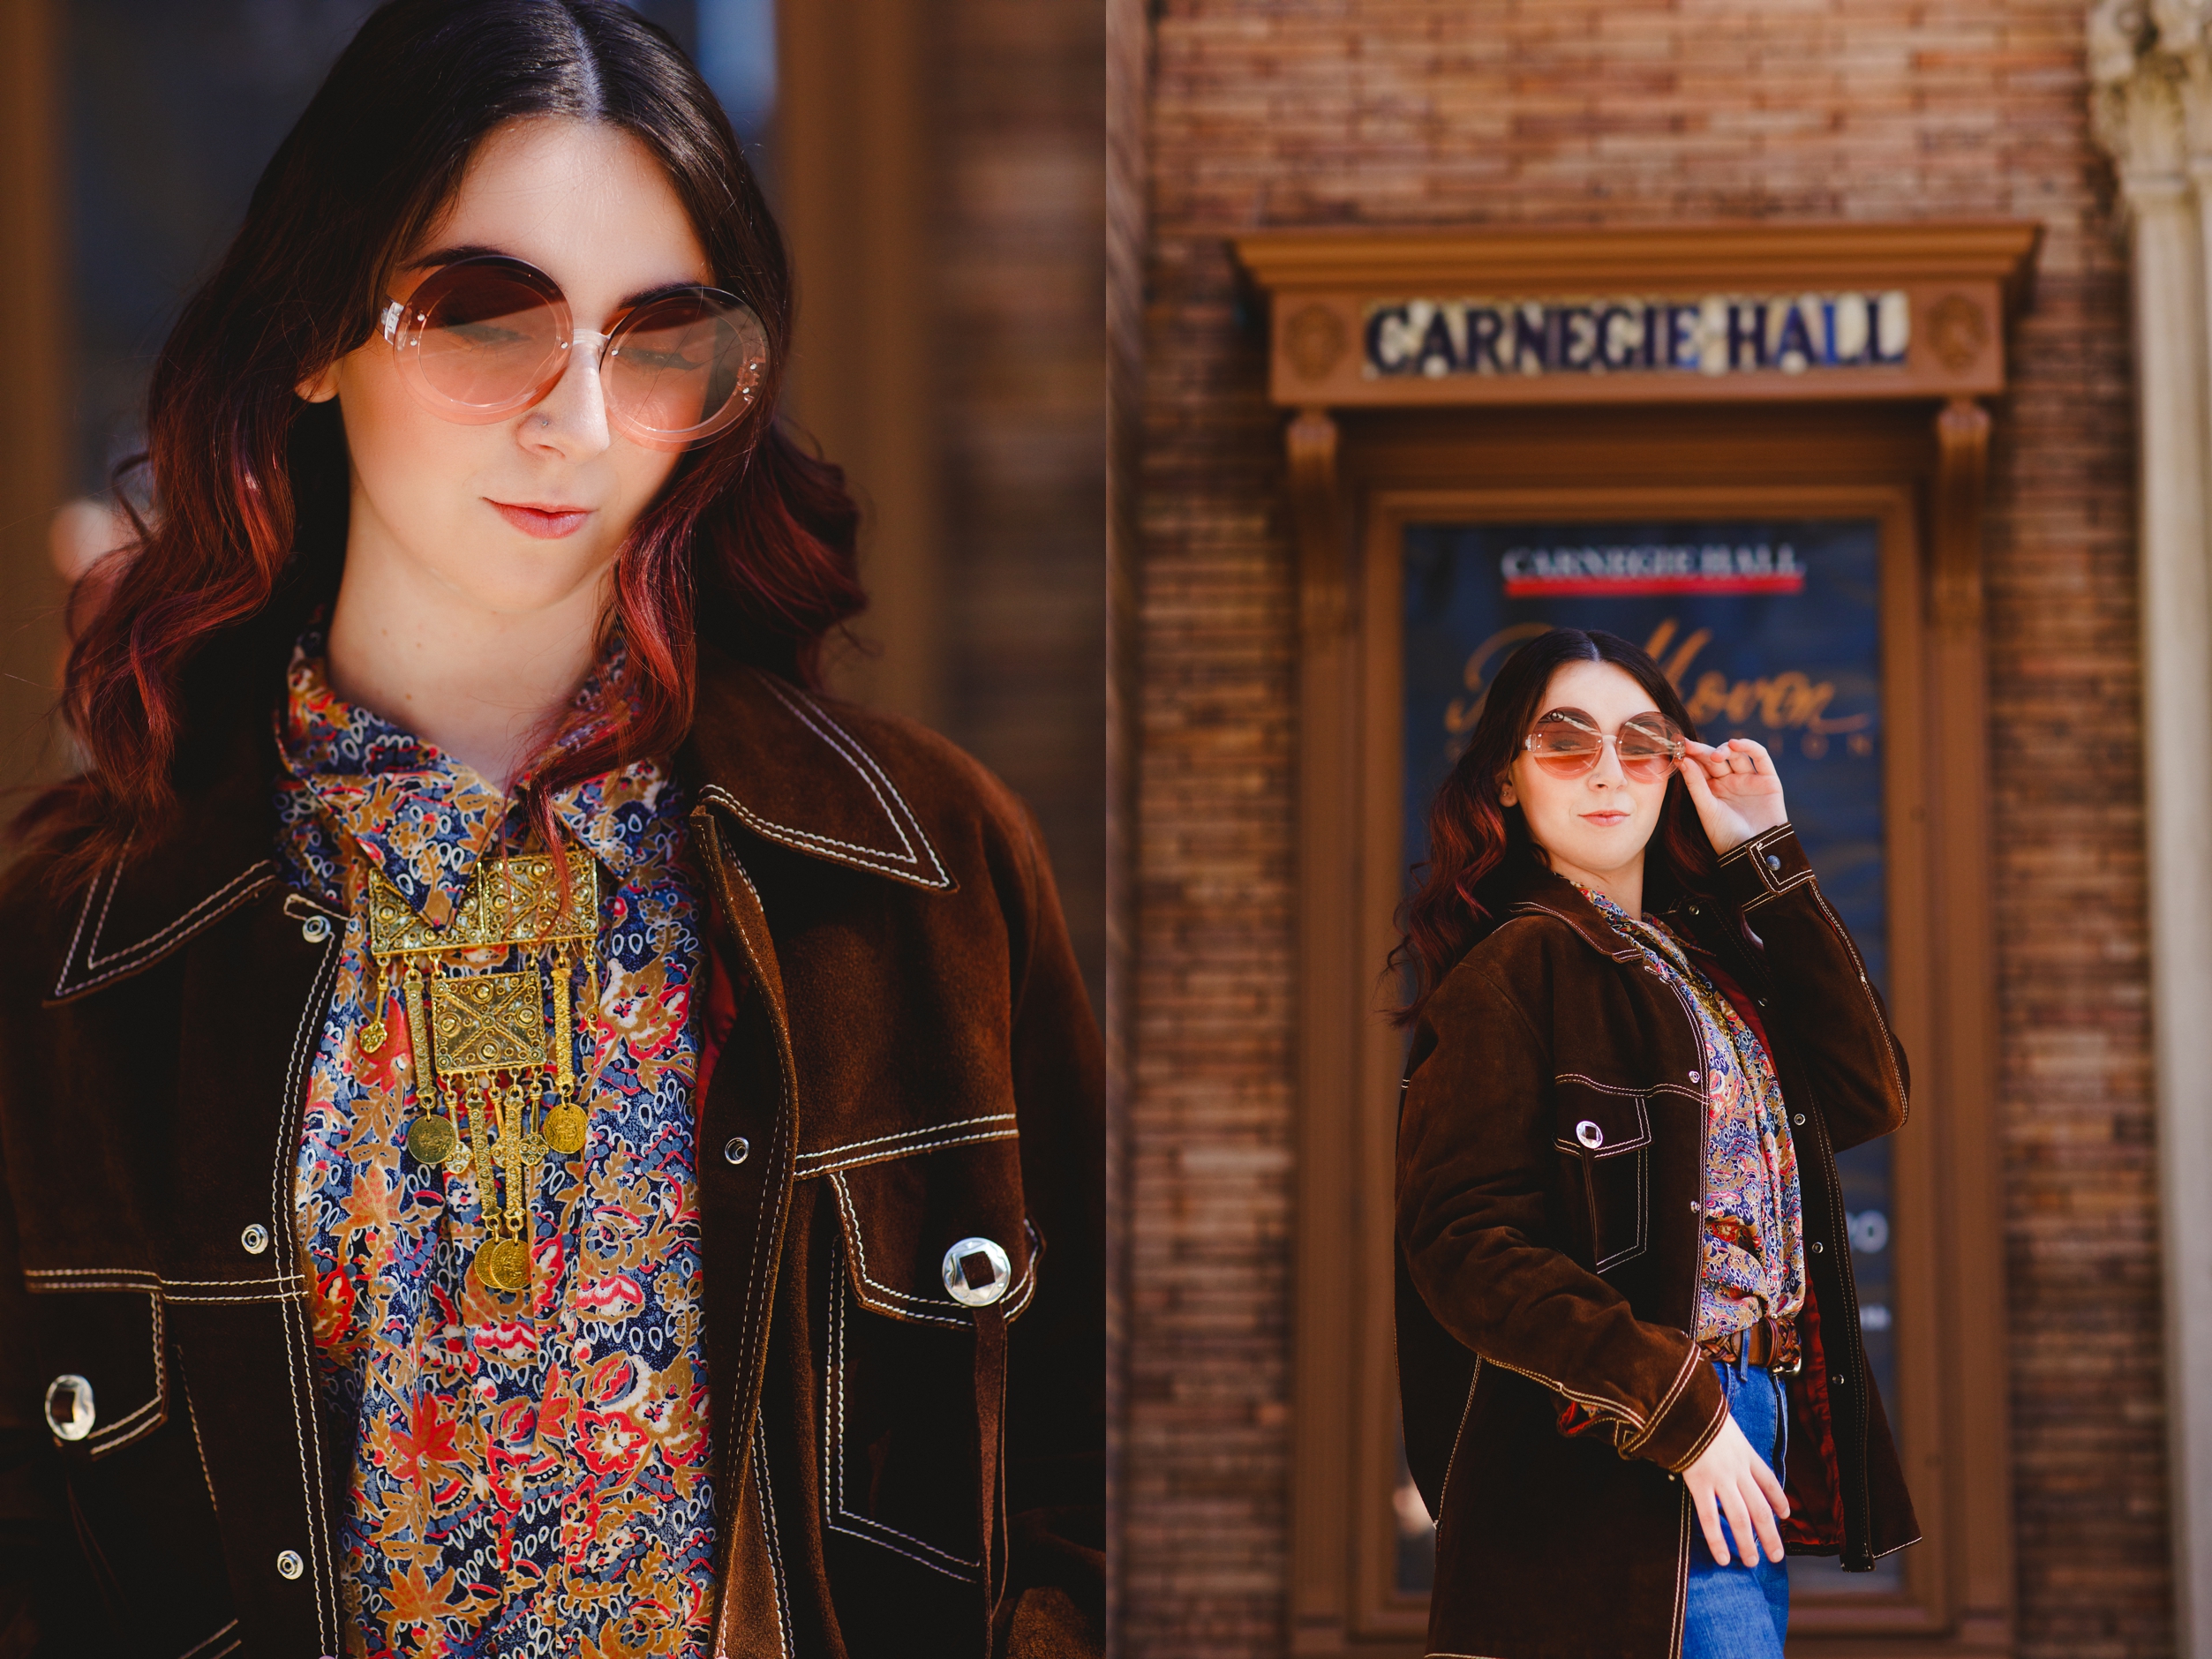 brunette model wearing vintage clothes outside Carnegie hall in New York City